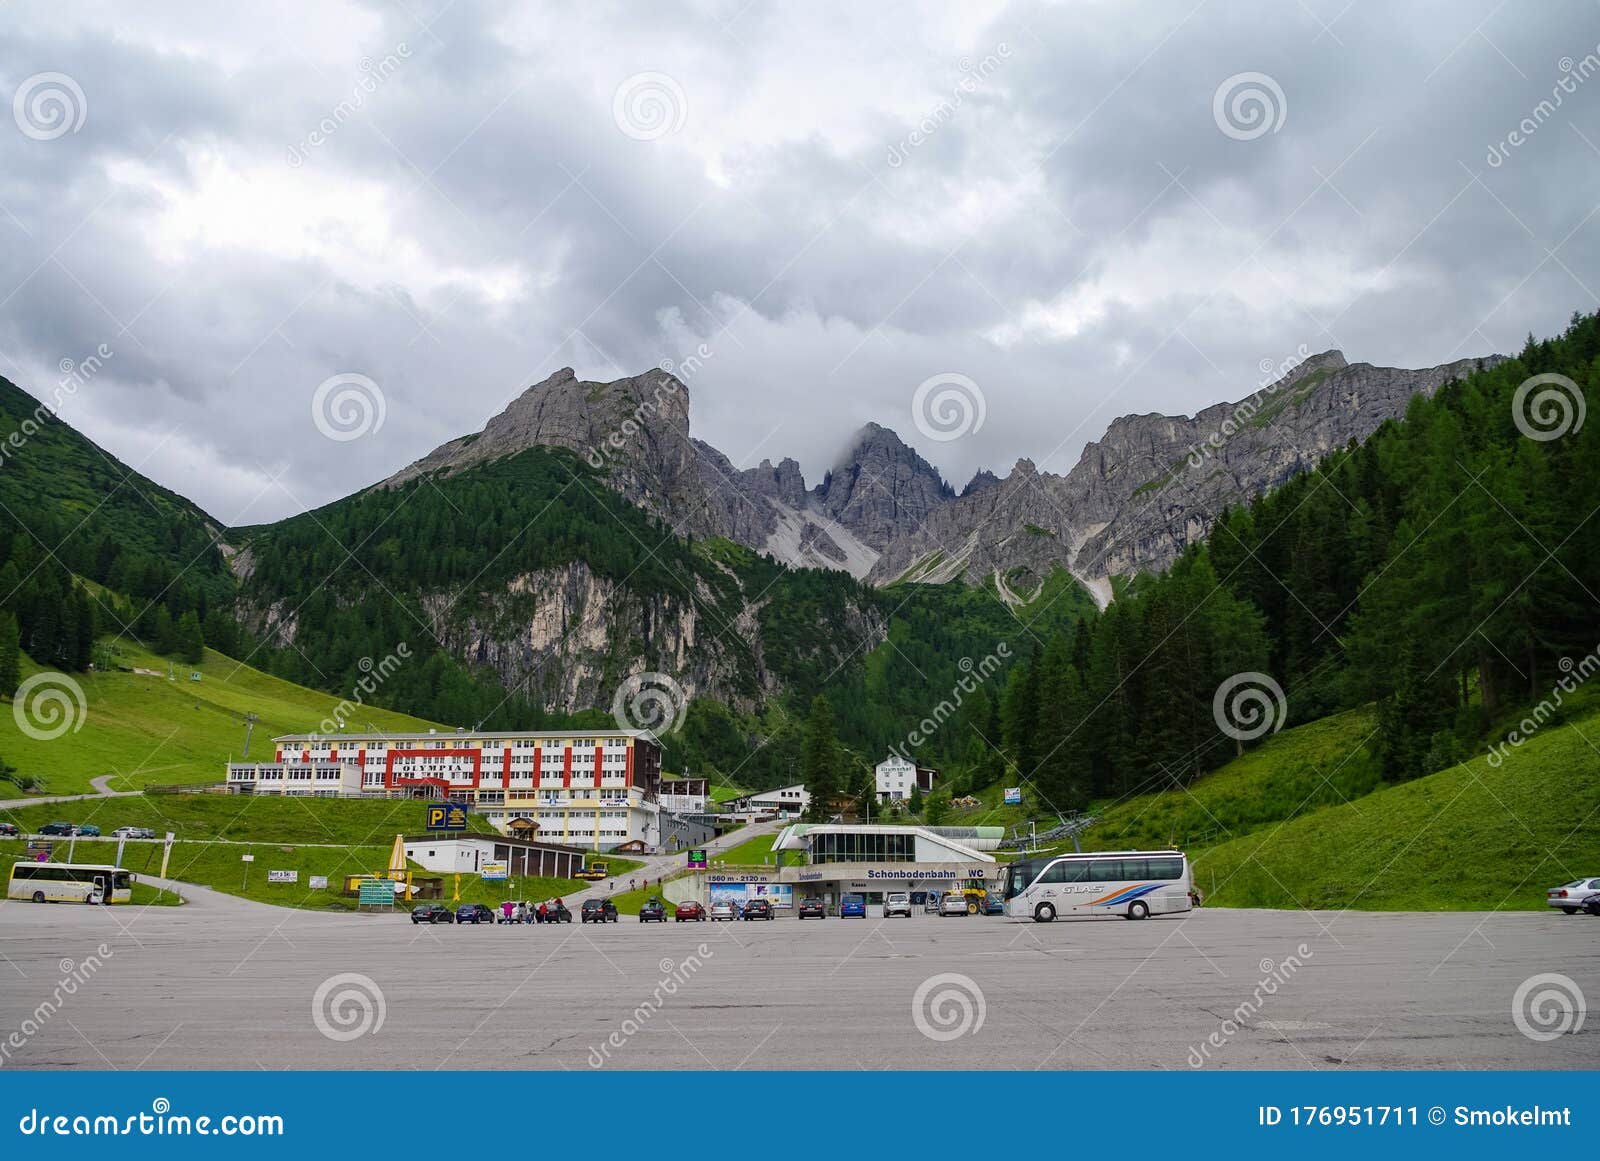 Summer View To Olympic Ski Resort And Funicular Station Of Axamer Lizum,  Tyrol, Austria Editorial Photo - Image of innsbruck, rock: 176951711